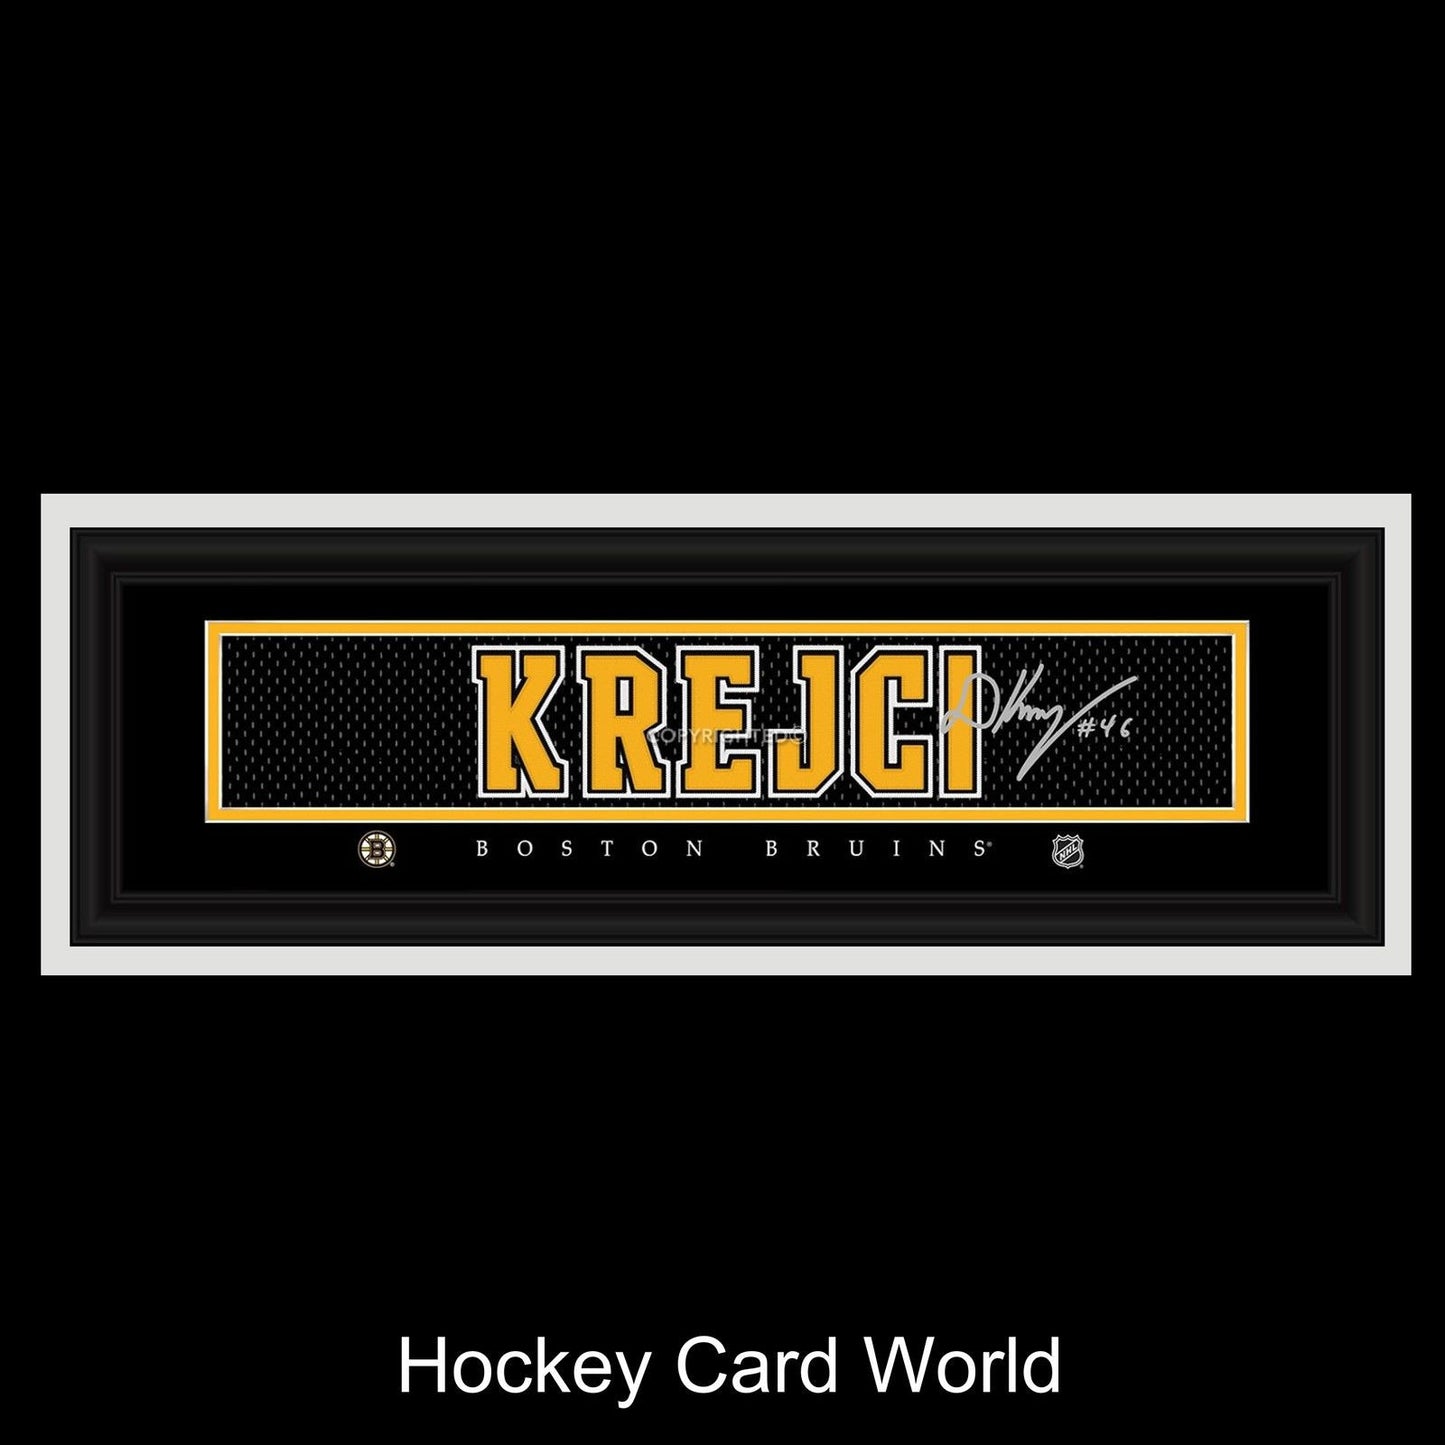 David Krejci Boston Bruins 24x8 NHL Official Licensed